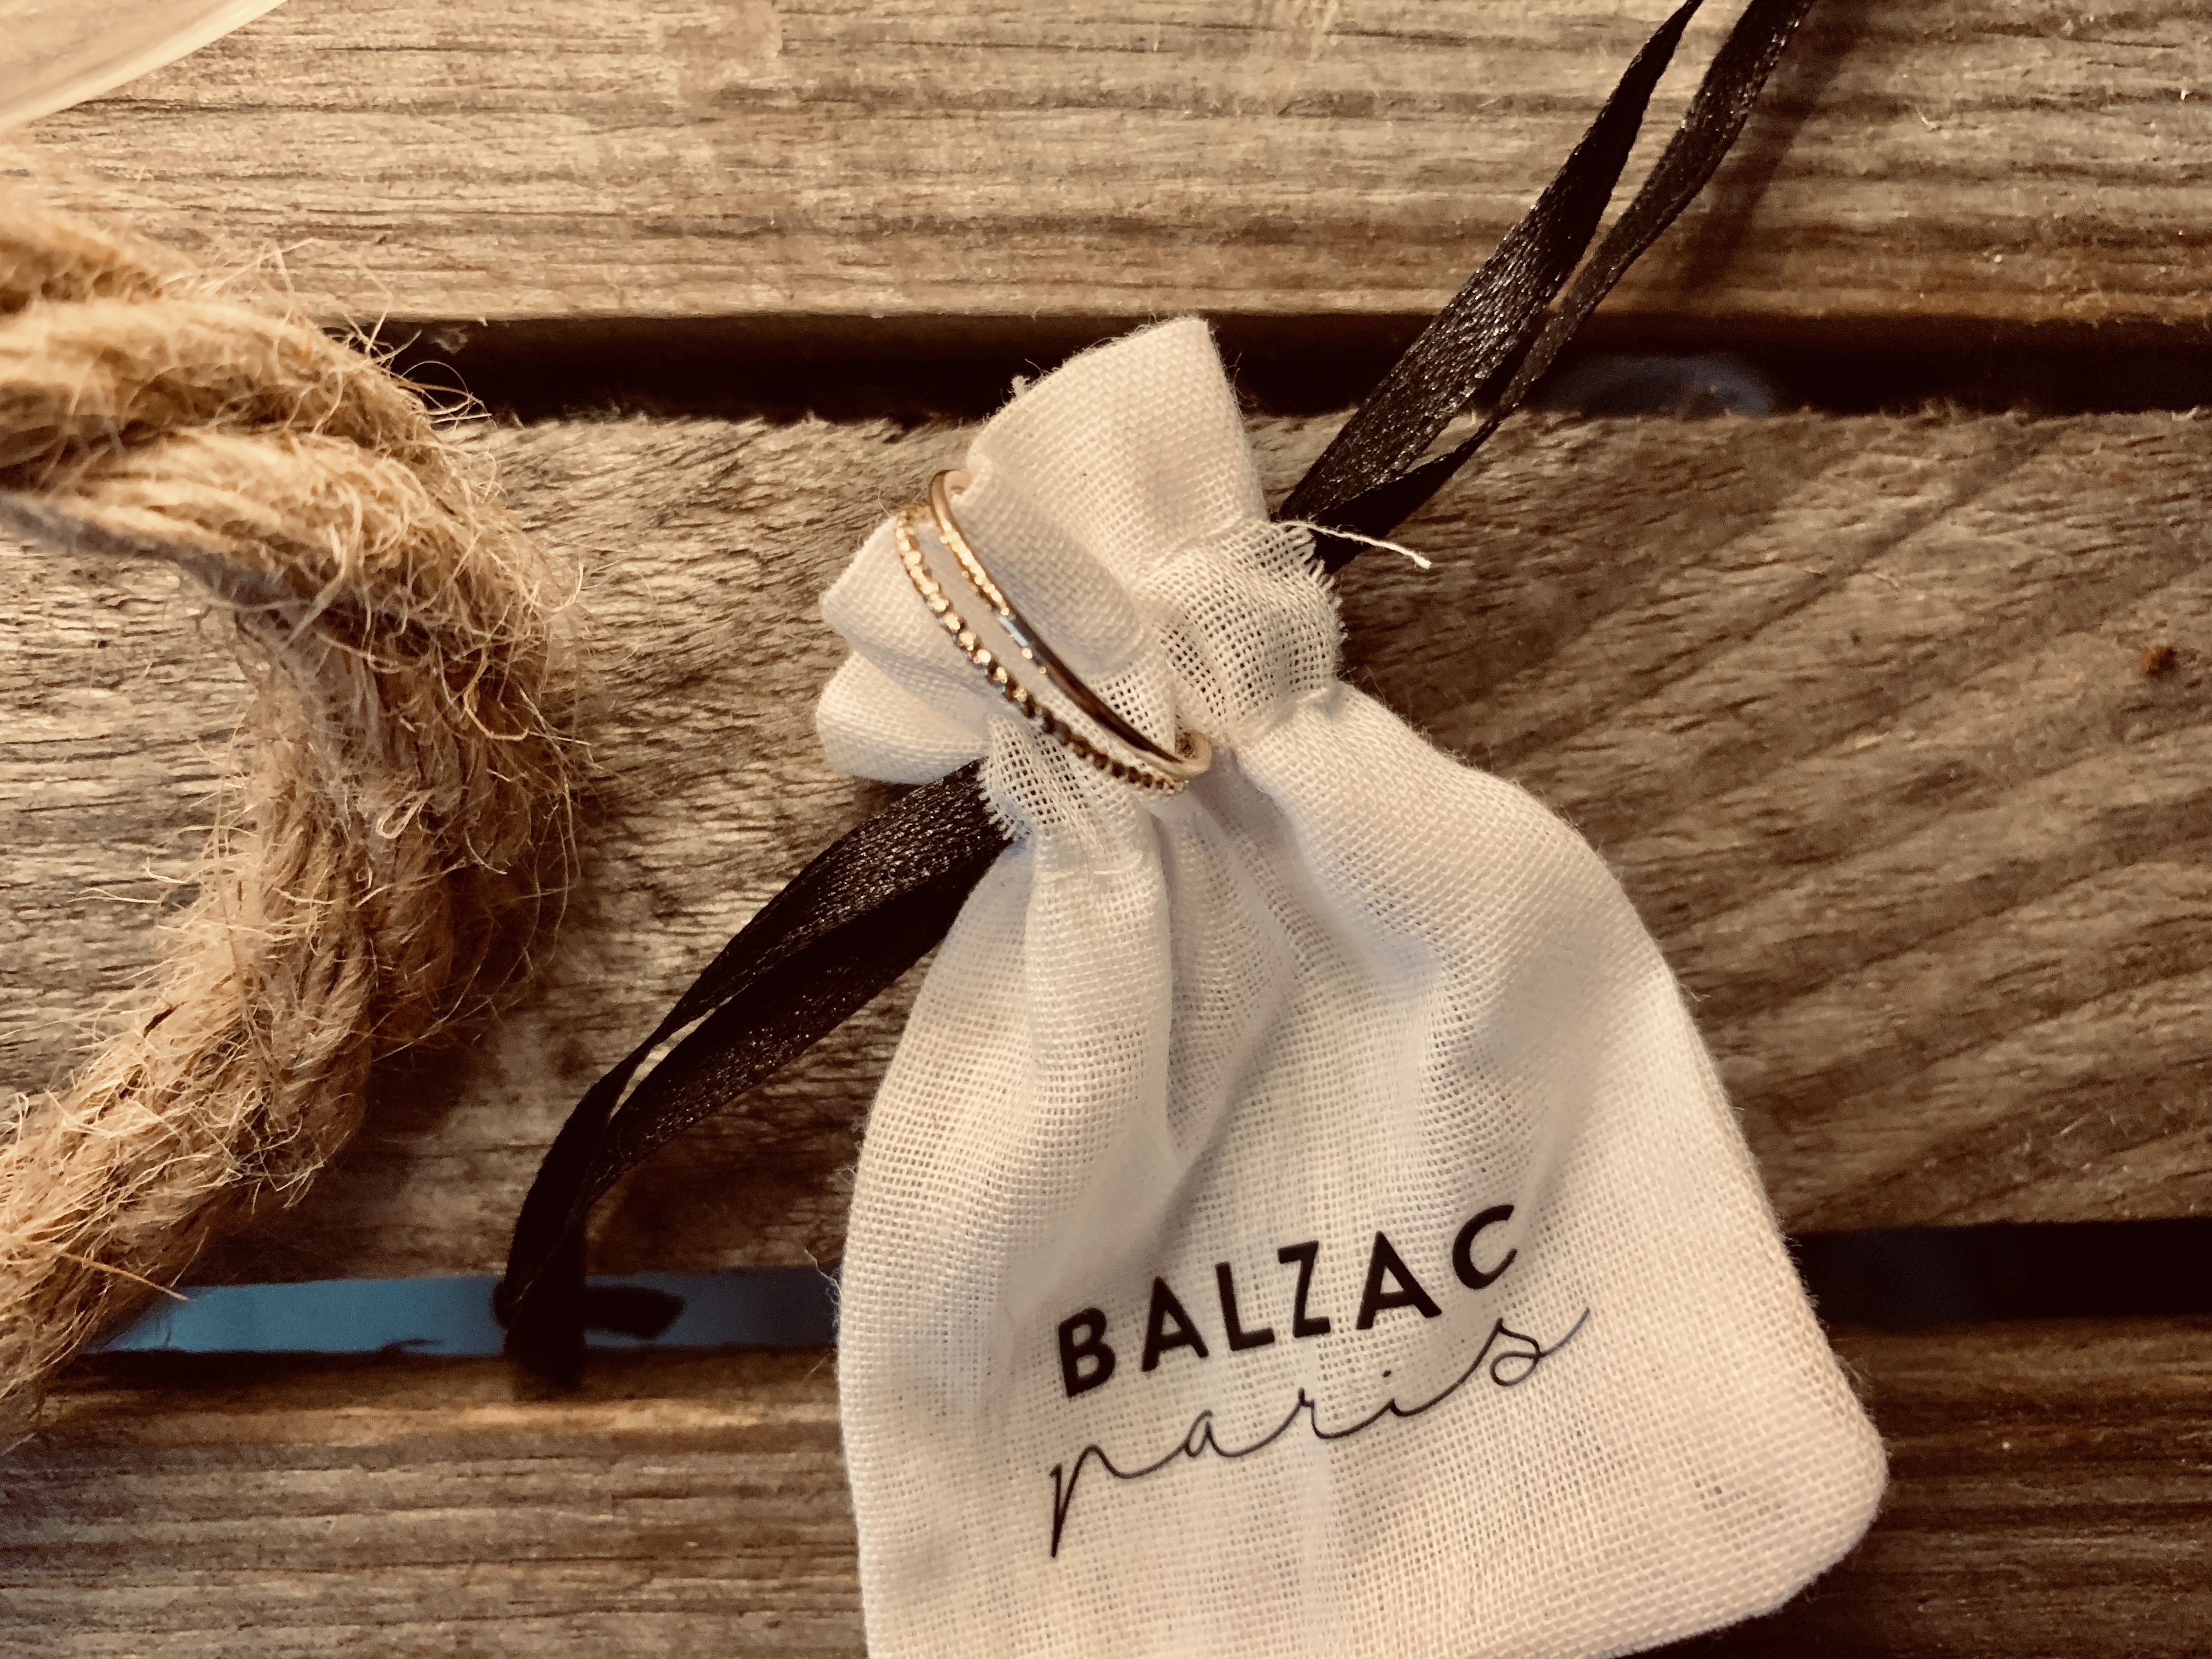 Bague Balzac Paris - Birchbox